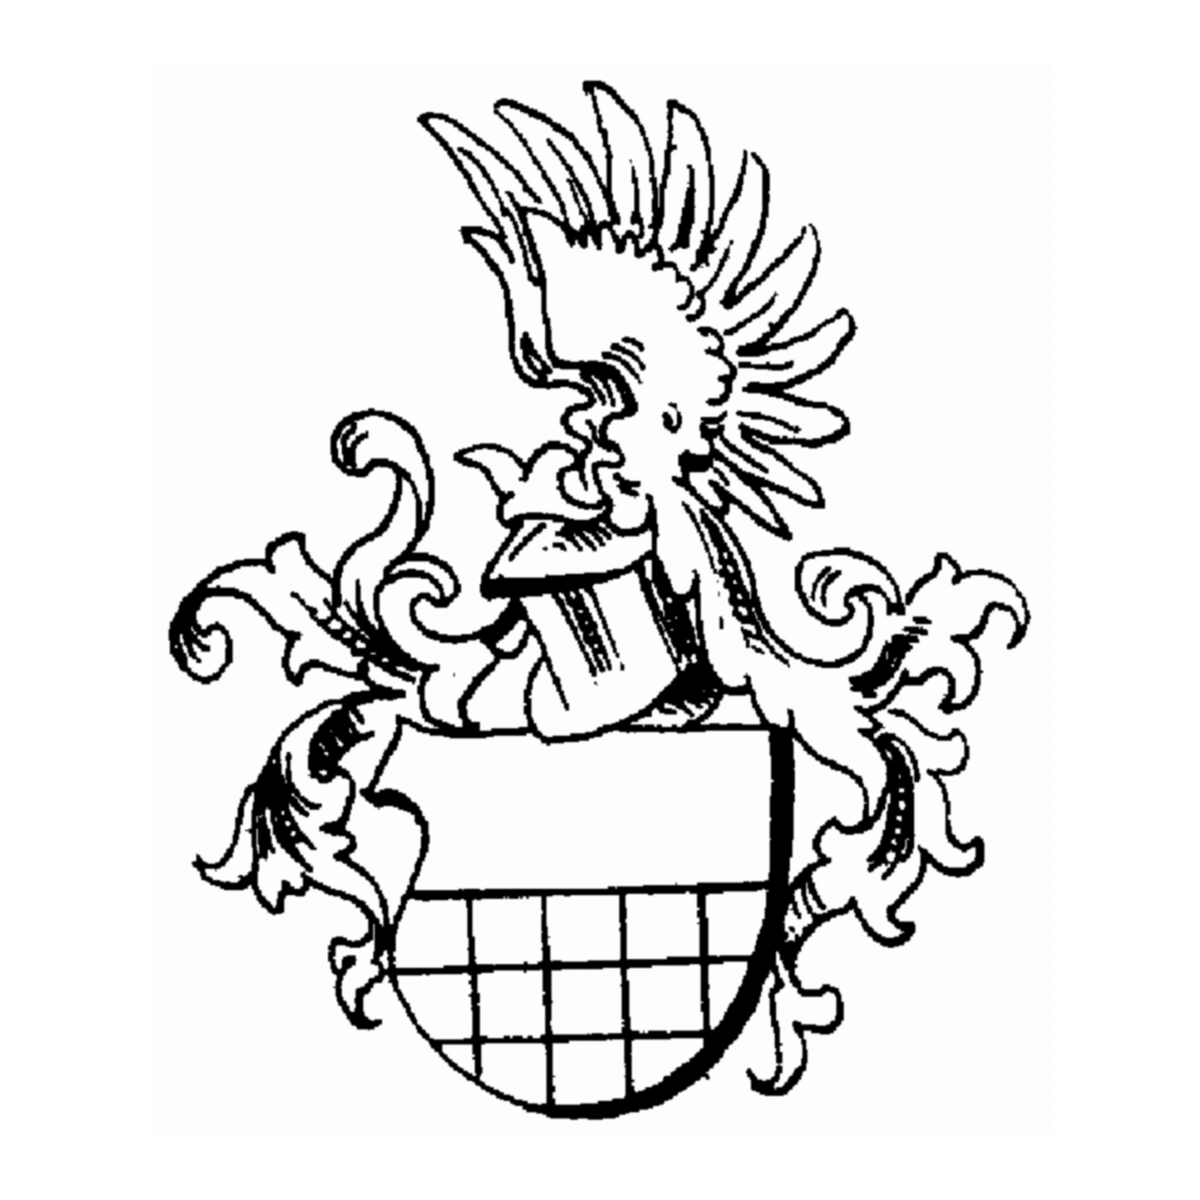 Wappen der Familie Ridder